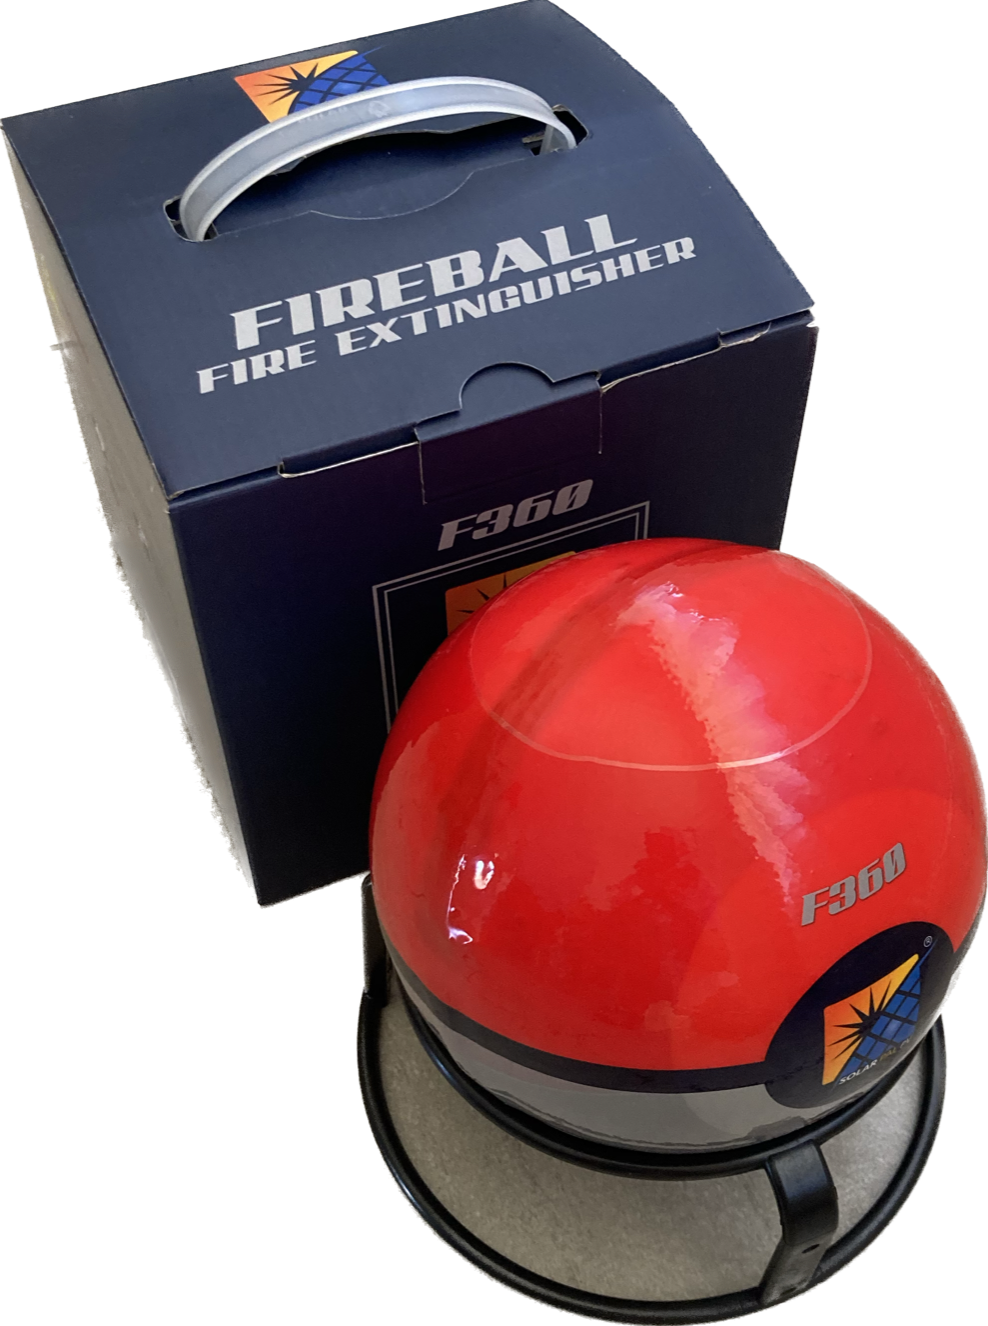 Fireball Fire Extinguisher